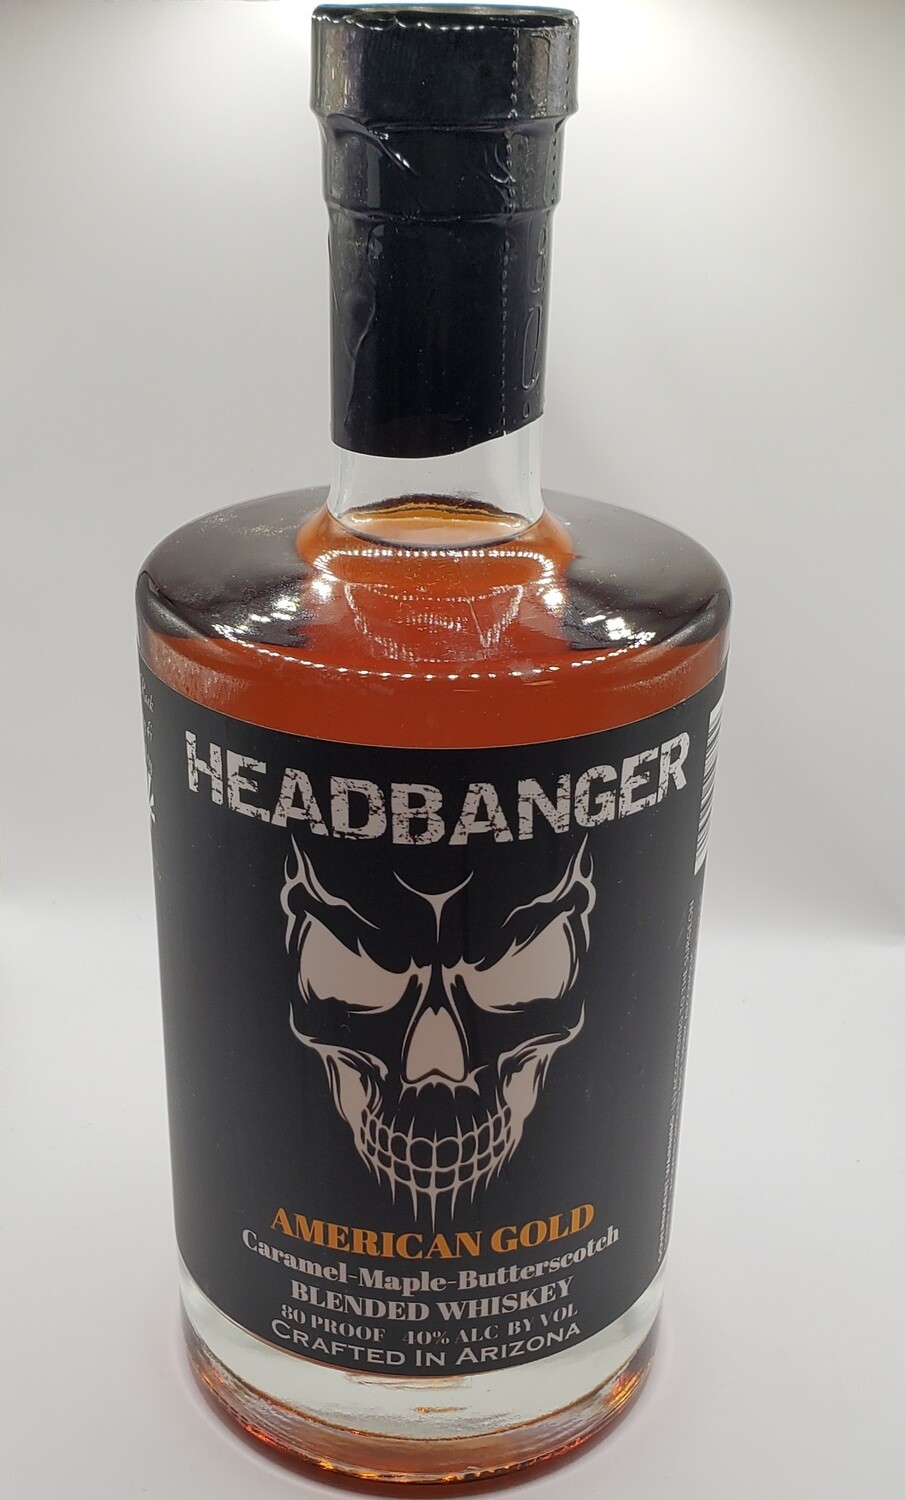 Headbanger "American Gold" Caramel-Maple-Butterscotch Whiskey 80 Proof